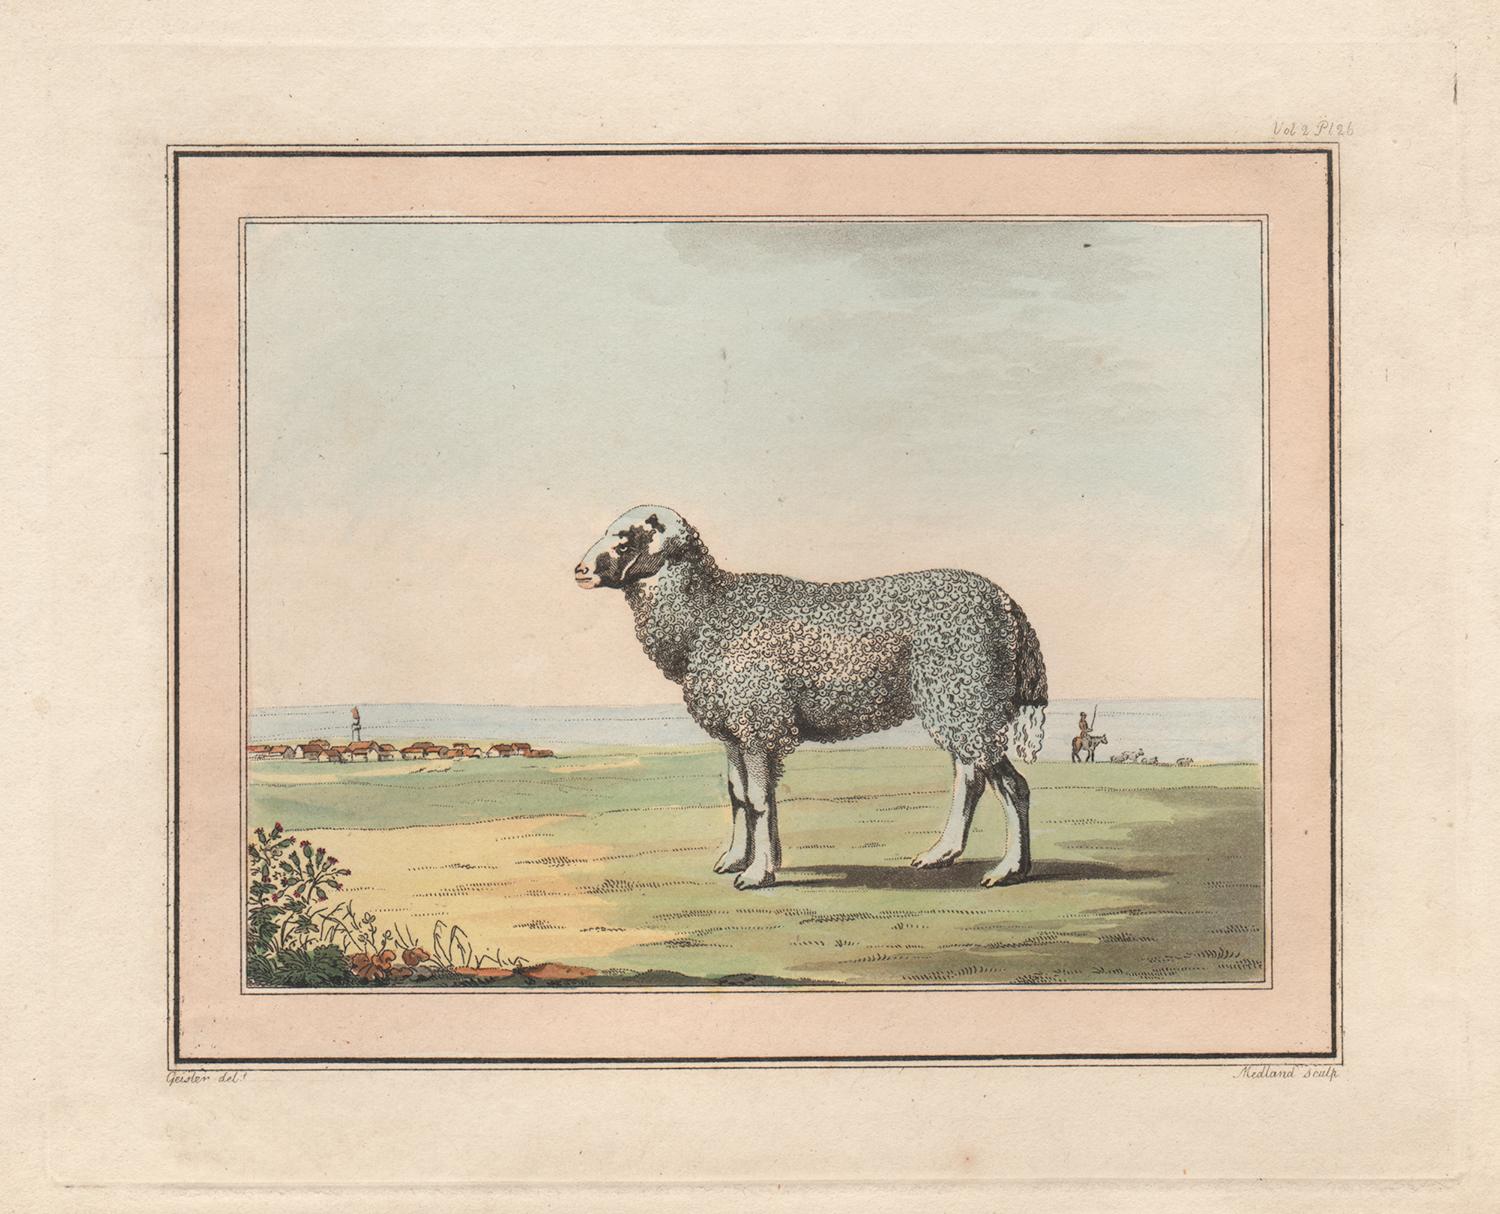 Thomas Medland after Christian-Gottlieb Geissler Animal Print - Sheep by coast, antique colour aquatint engraving, circa 1800